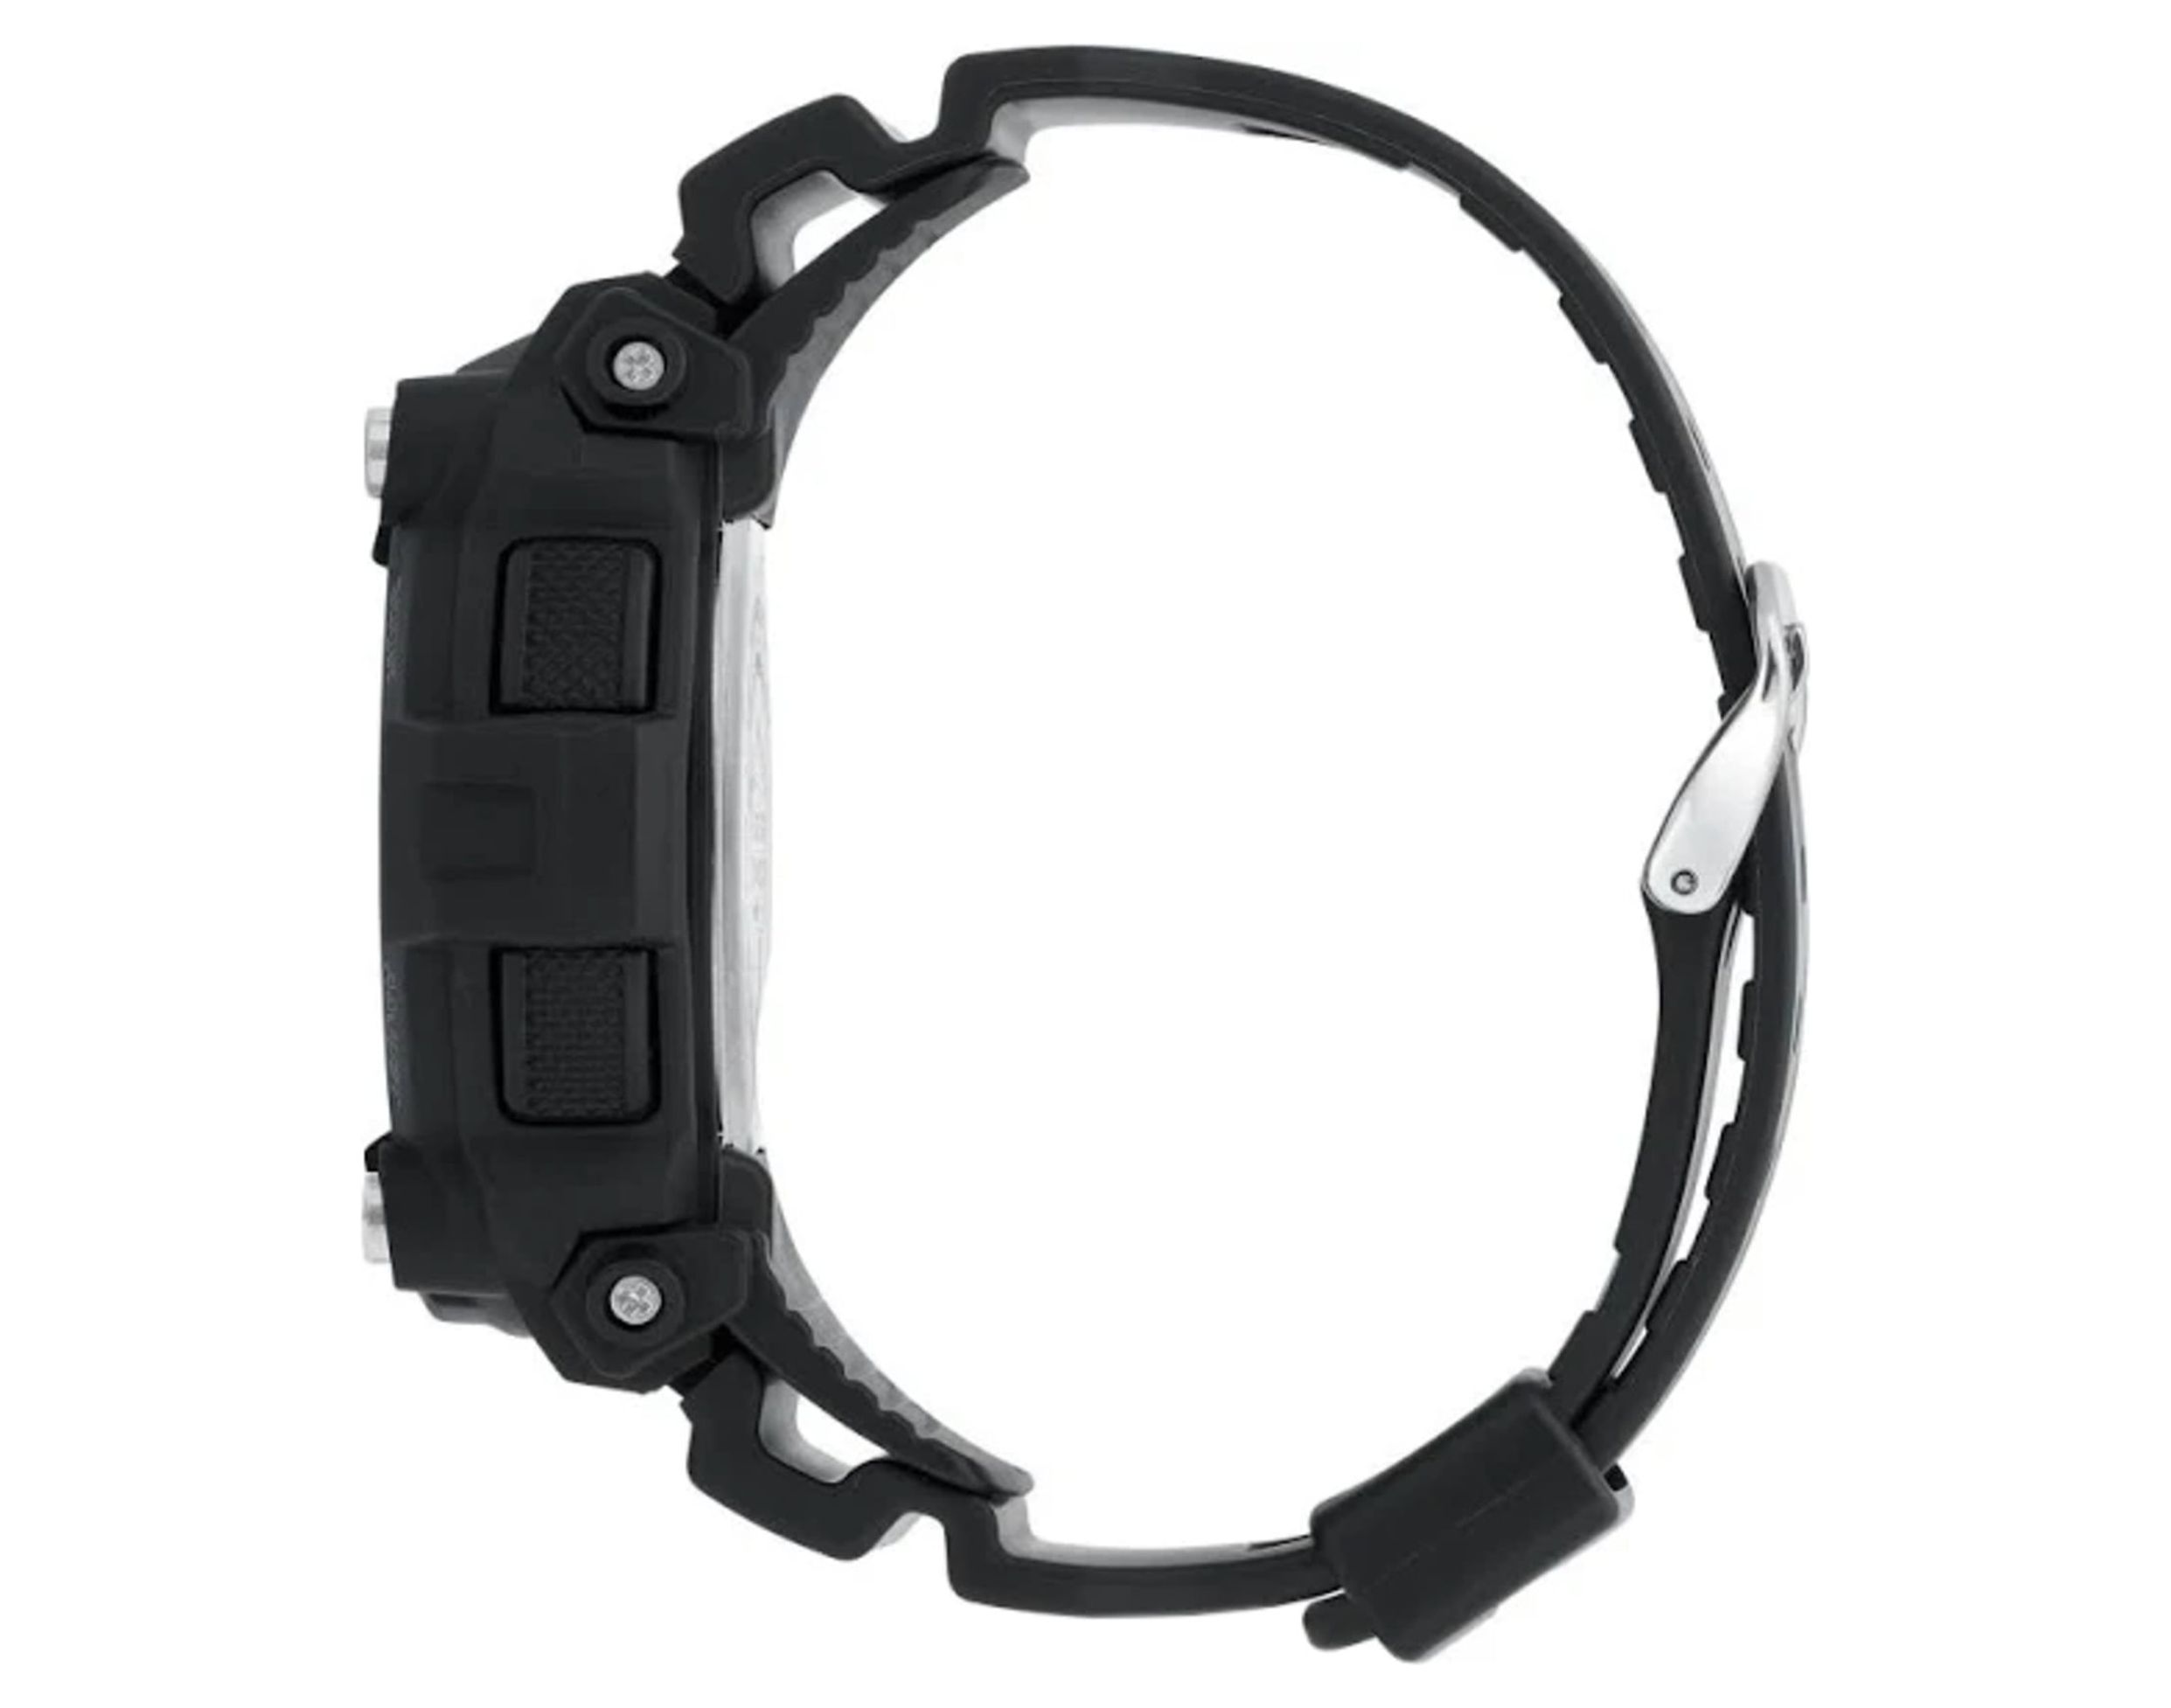 Casio G-Shock Tactical Men's Shoreman Digital Wrist Watch, Black GW-7900B-1 